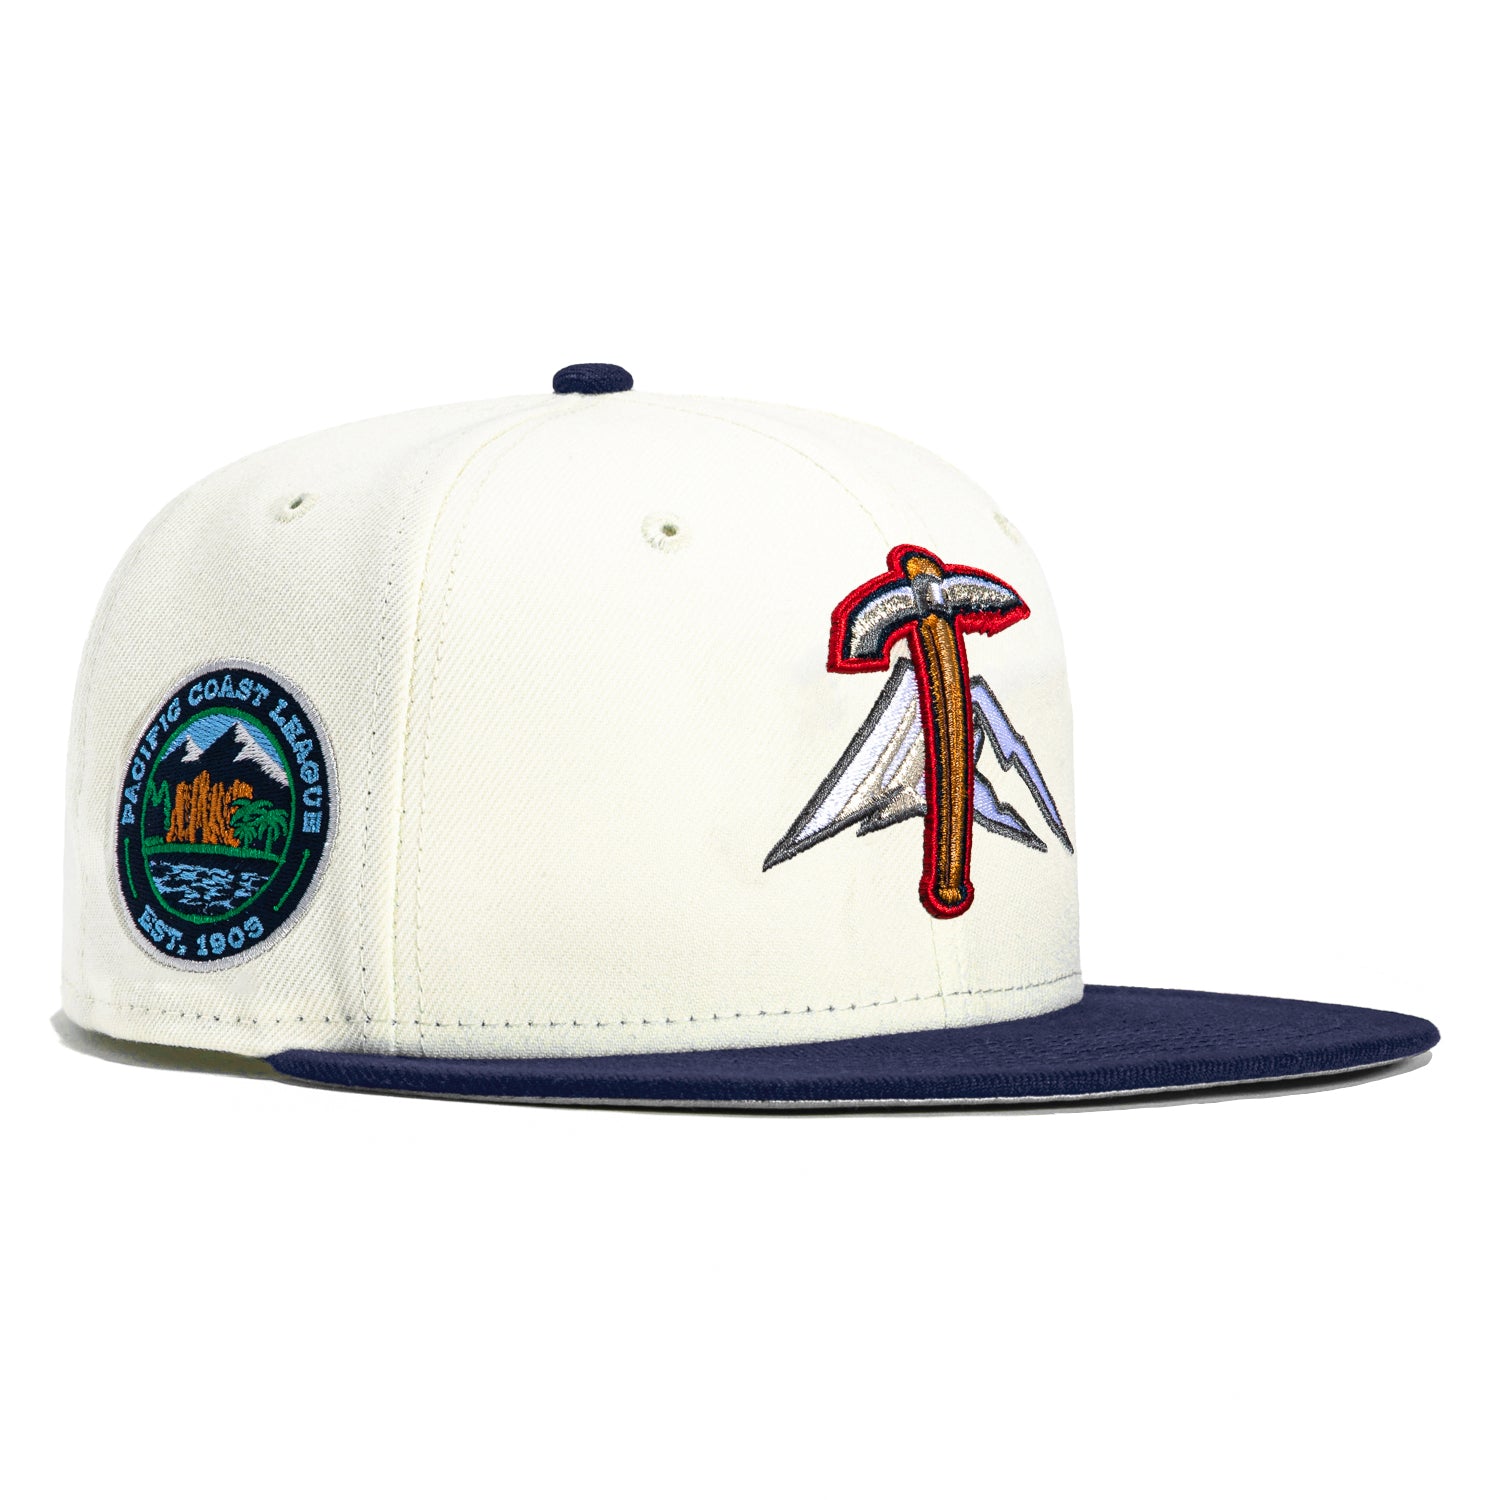 New Era 59FIFTY Tacoma Rainiers Pacific Coast League Patch Hat - White, Navy White/Navy / 7